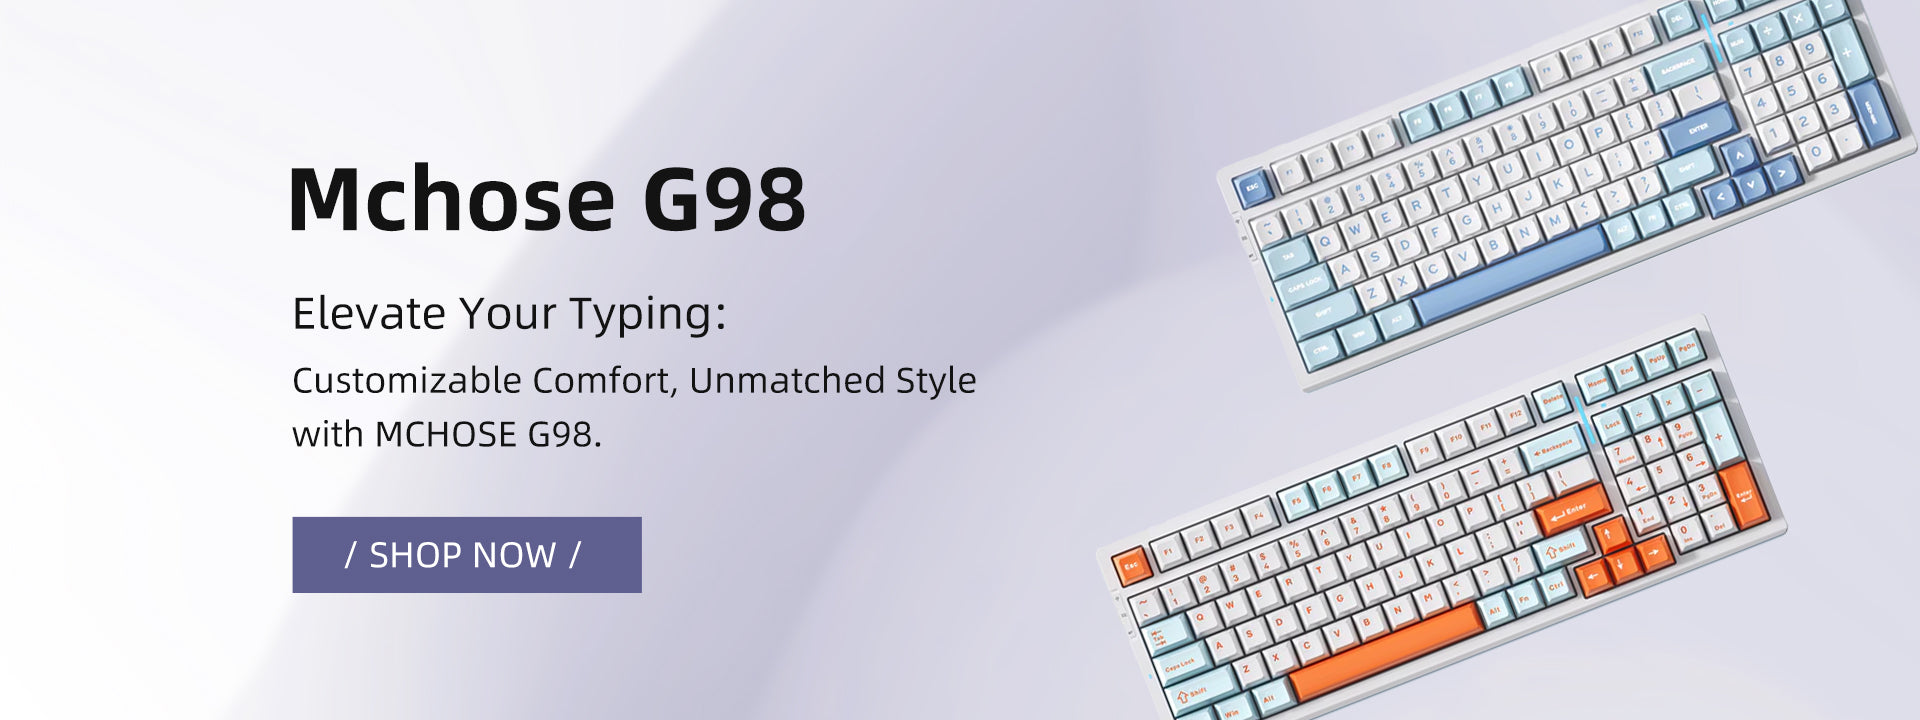 Mchose G98 Keyboard - tapelf Banner Image